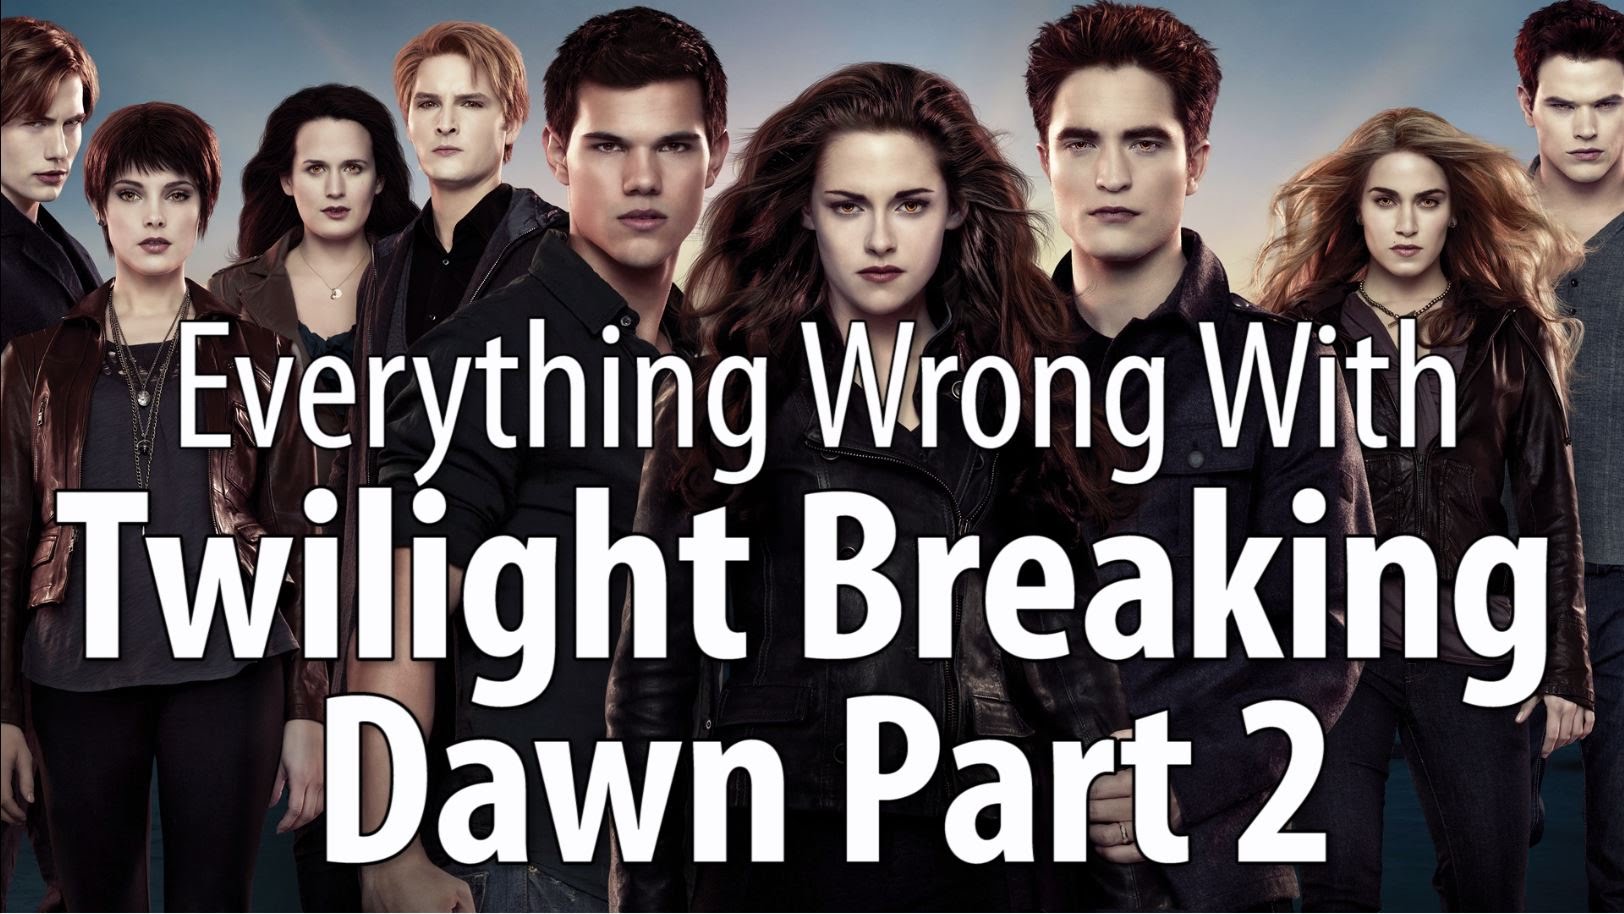 for windows download The Twilight Saga: Breaking Dawn, Part 2